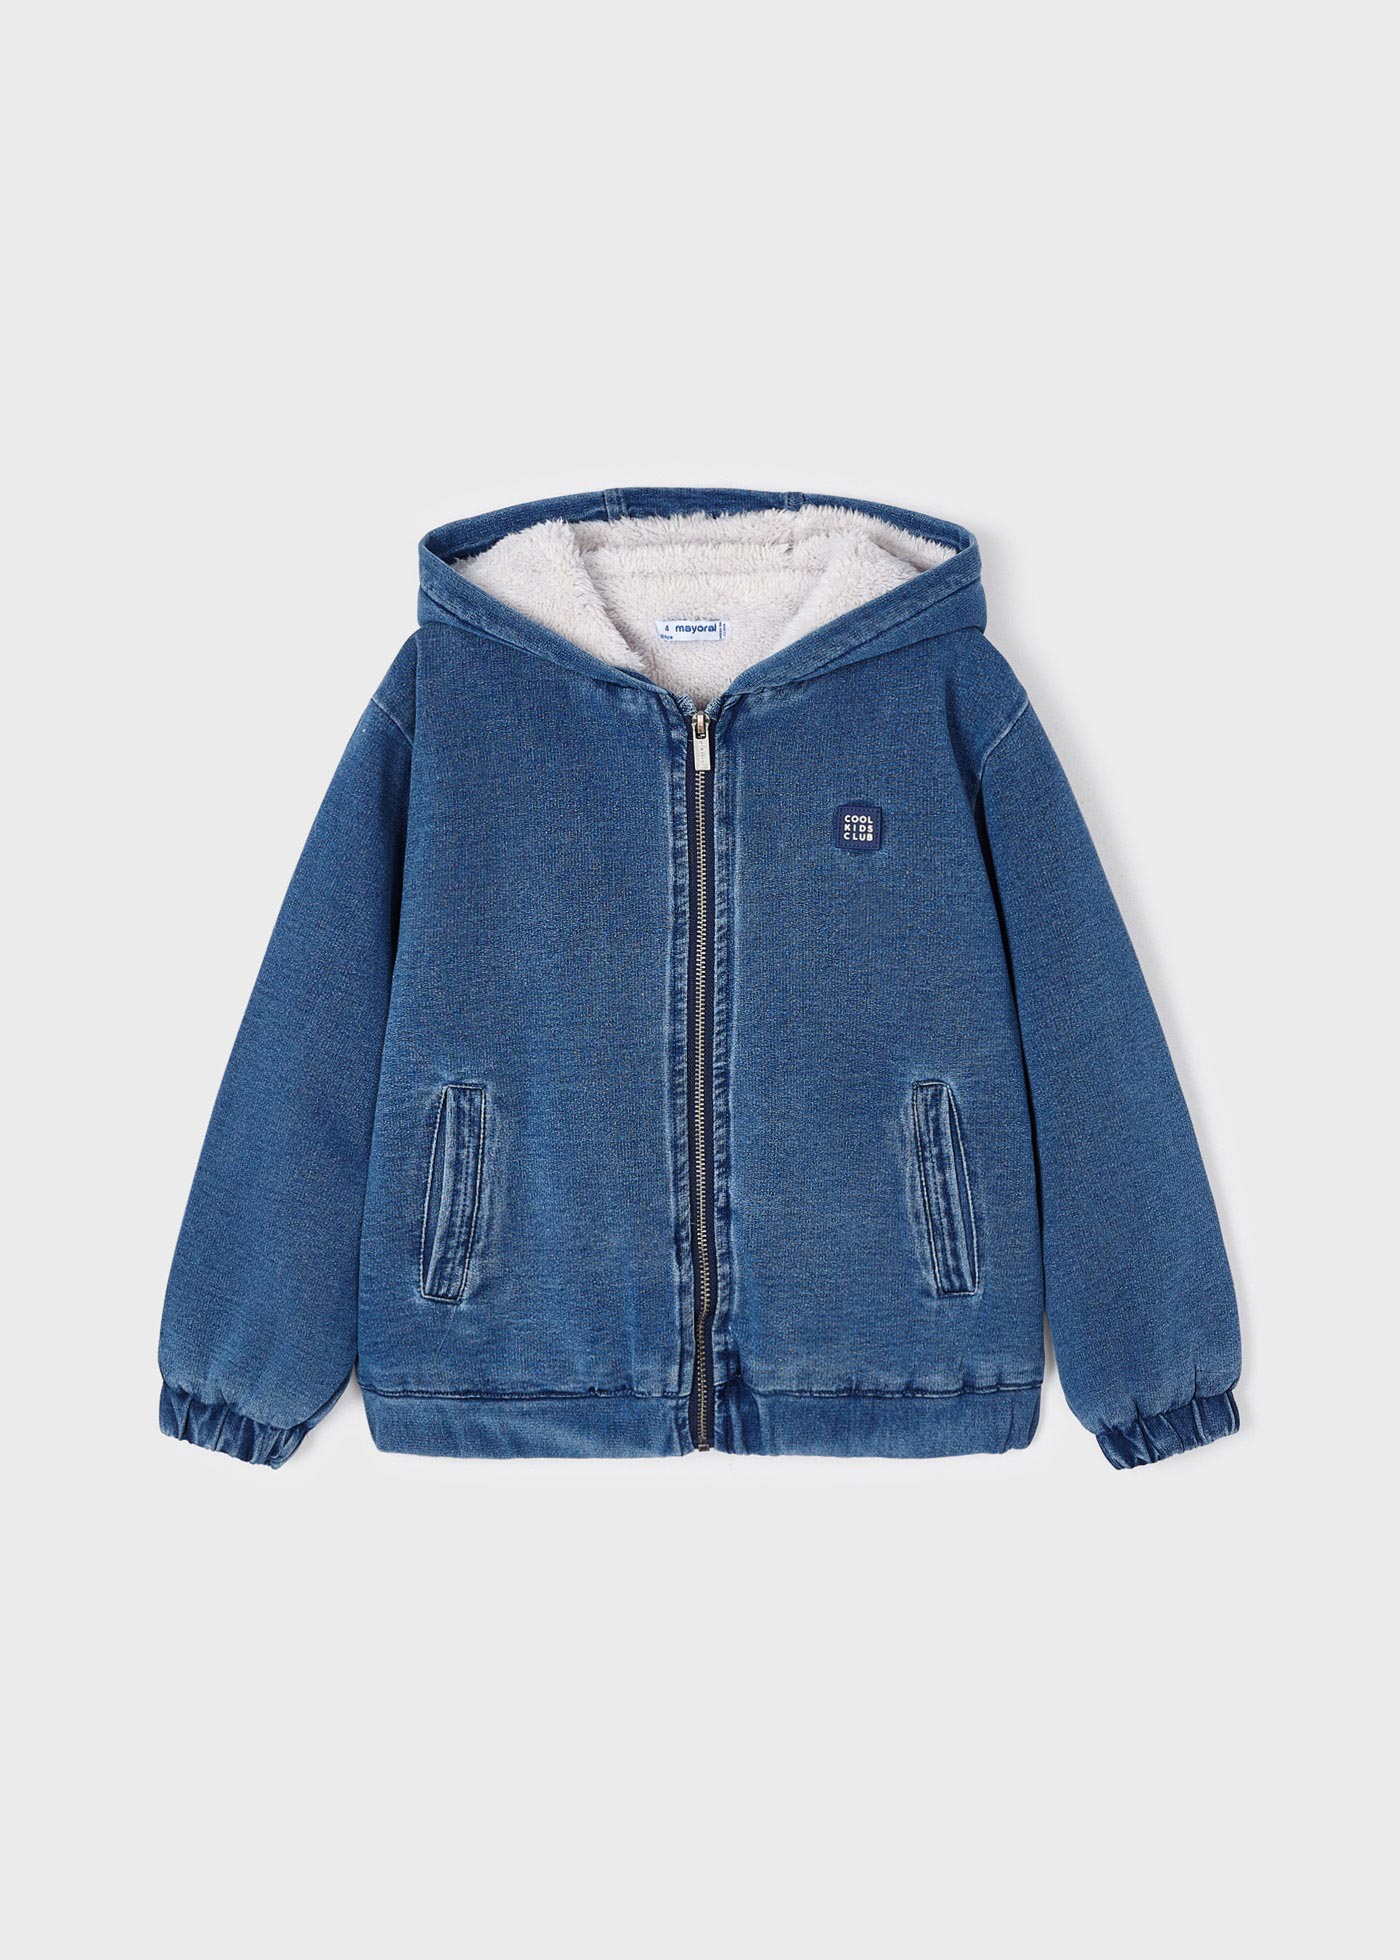 RAXTIN CLOTHING CO | Kids Fashion Tees and Denim | Boys denim jacket, Boy  fashion, Kids denim jacket